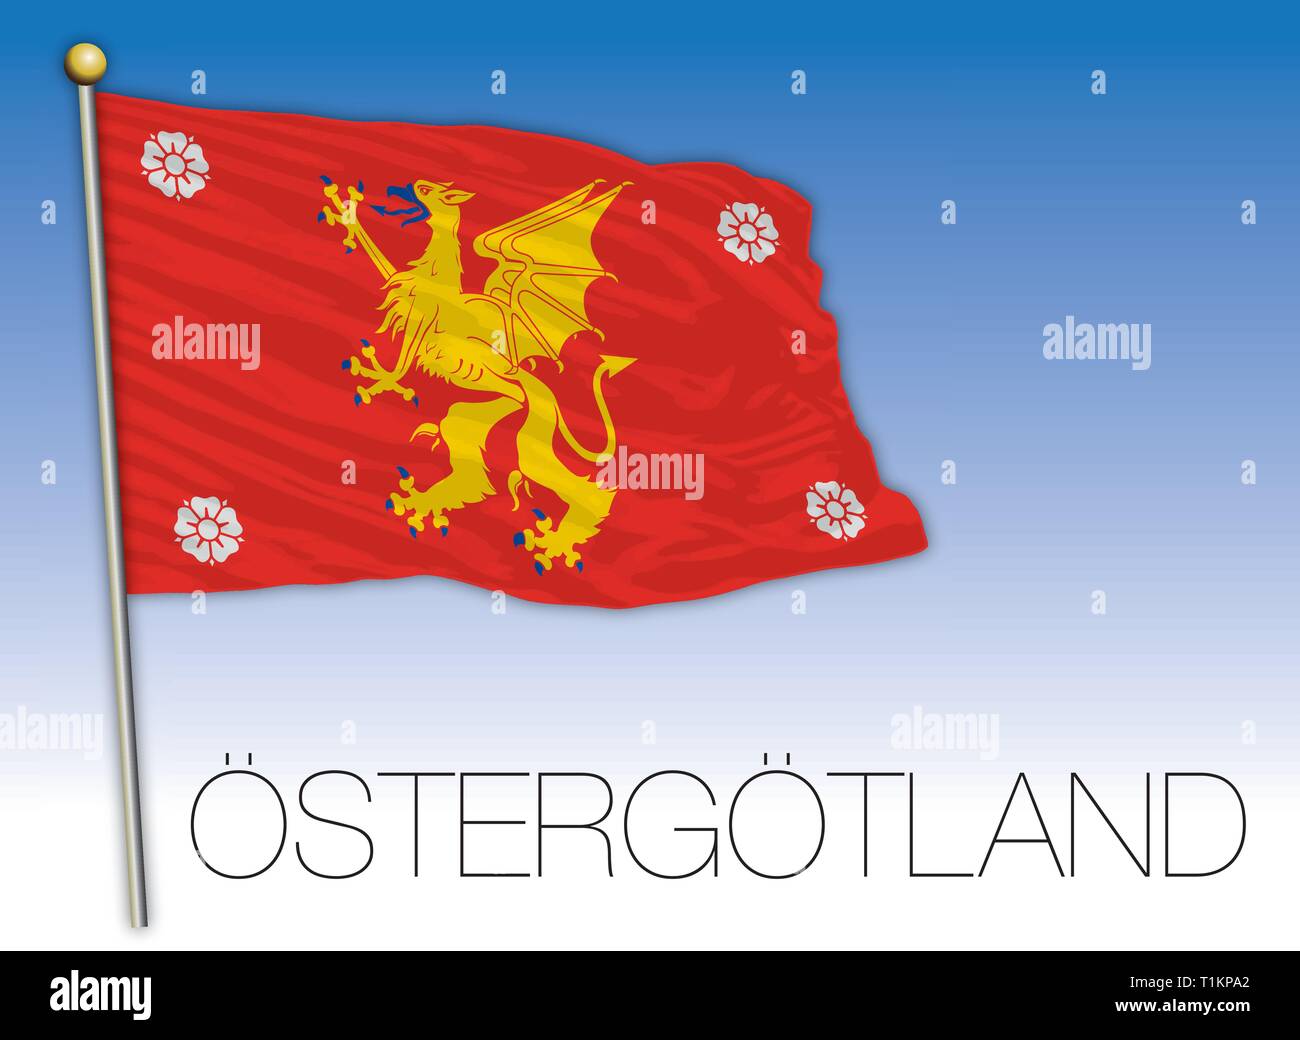 Ostergotland regional flag, Sweden, vector illustration Stock Vector